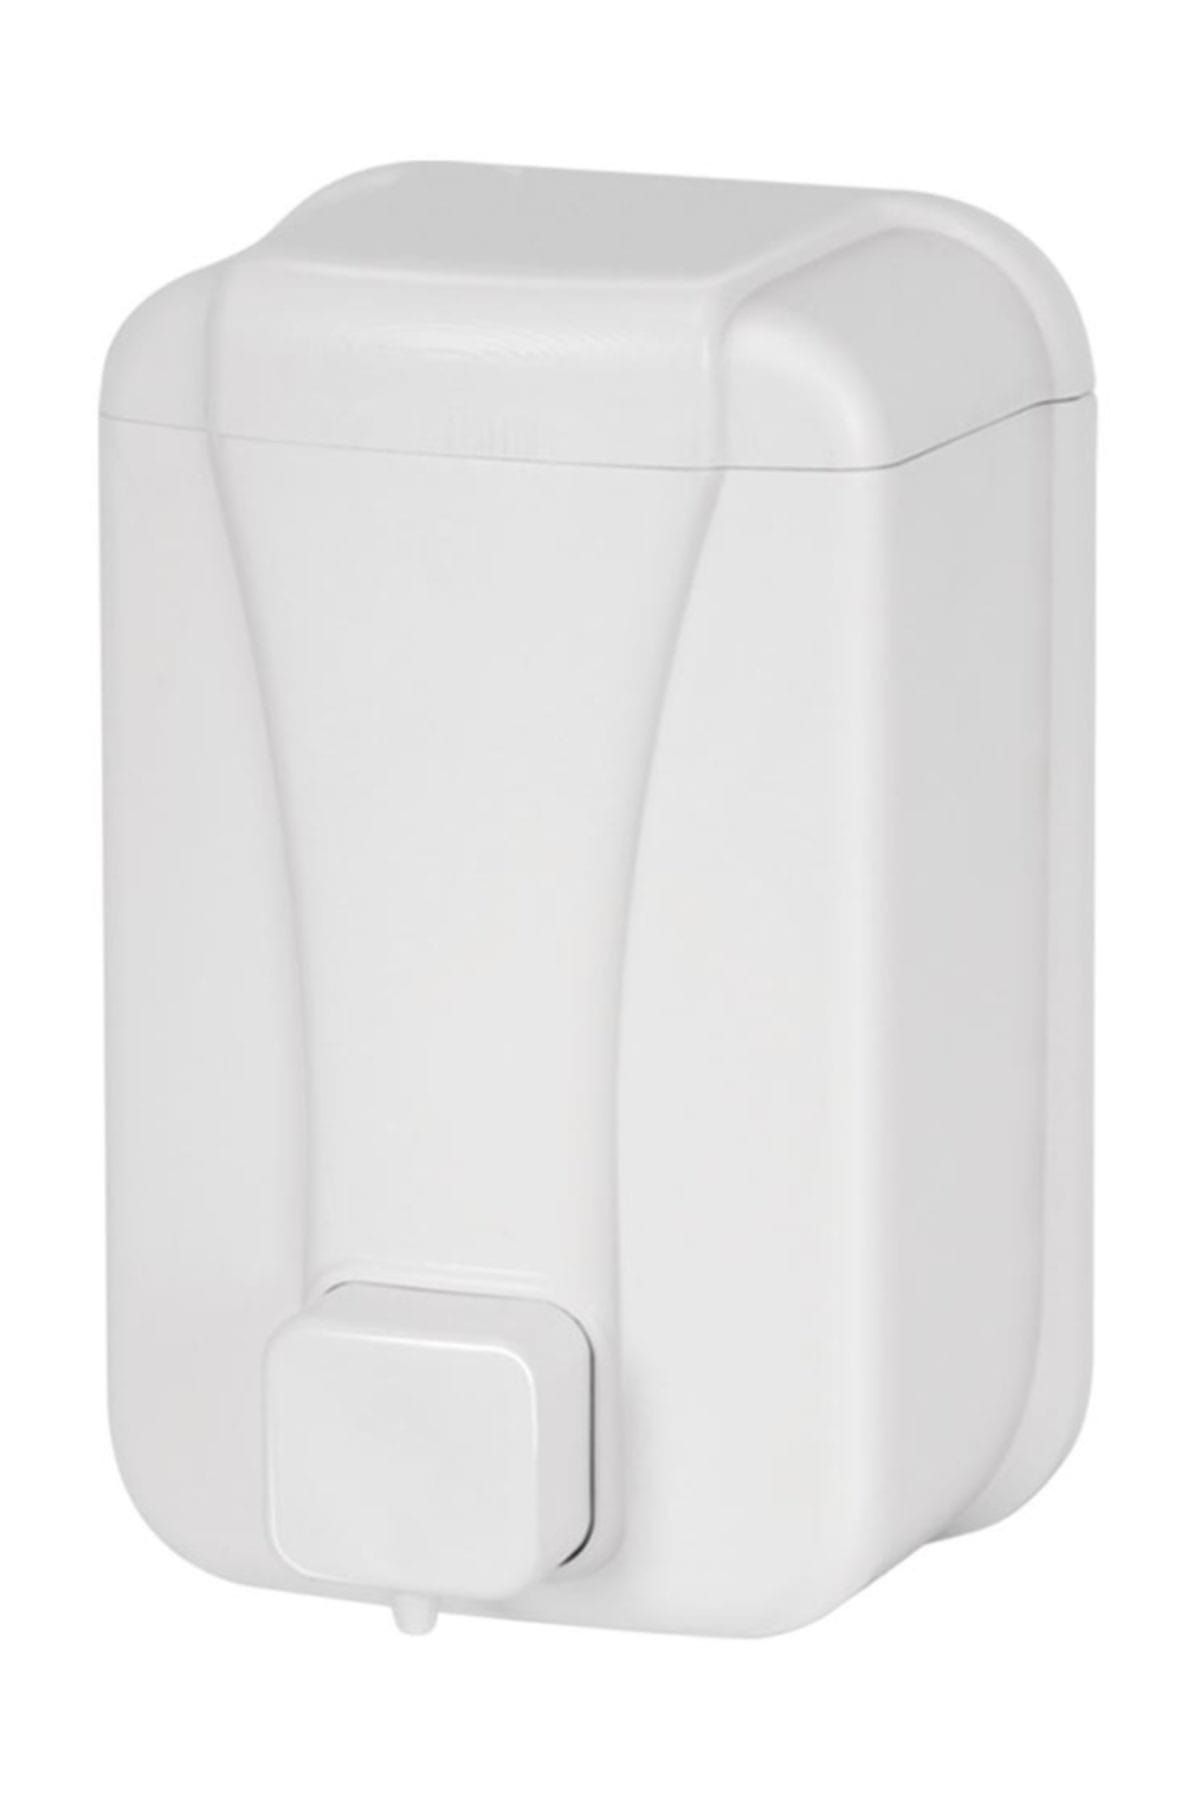 Alper Banyo 3424-0 Standart Köpük Sabun Dispenseri 500 Cc. Beyaz